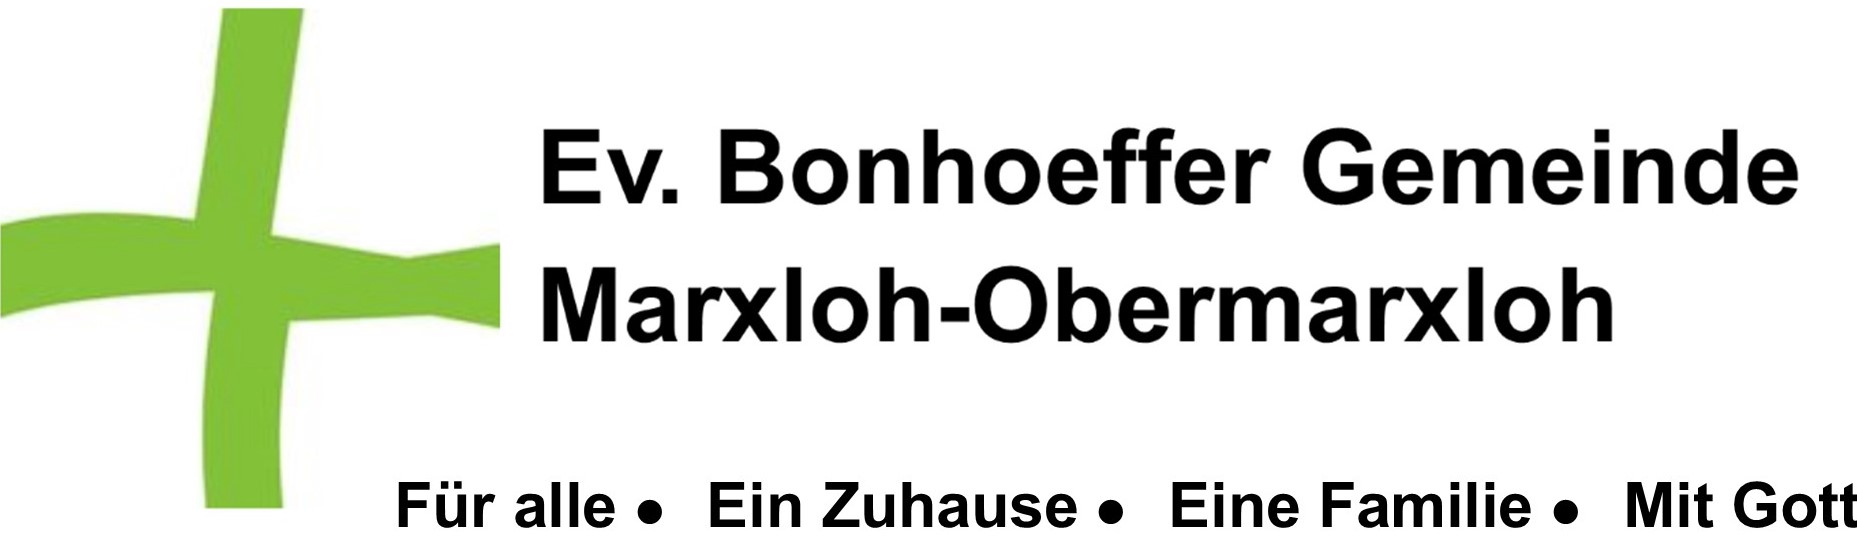 Ev. Bonhoeffer Gemeinde Marxloh-Obermarxloh